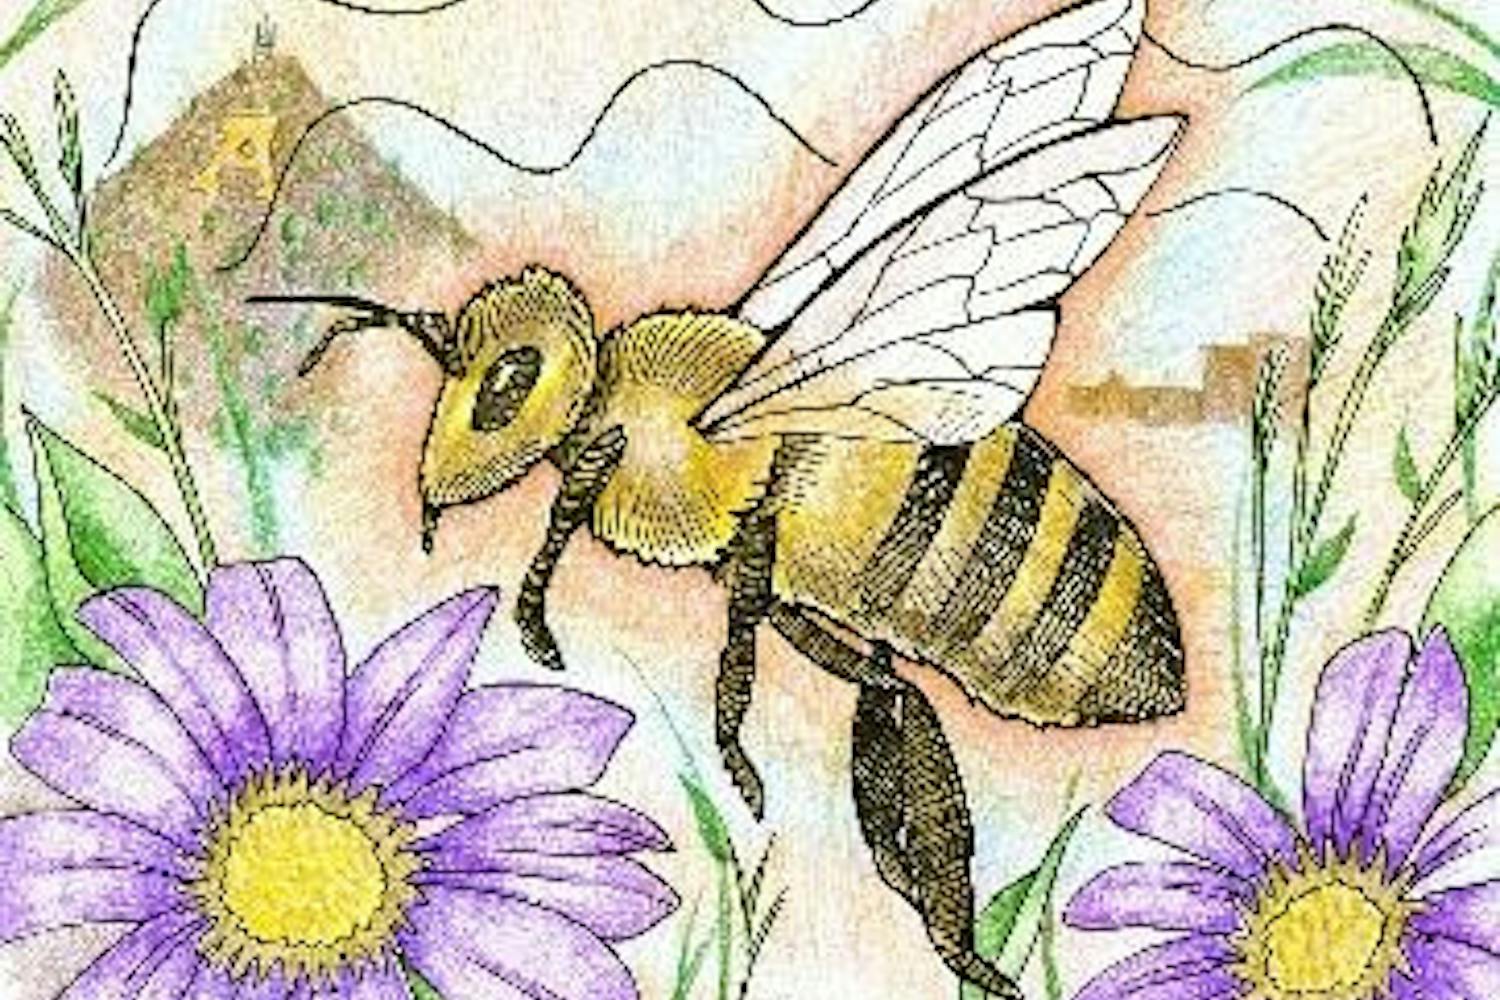 SciTech-Pesticides-Affecting-Bee-Populations-villar-1121.jpg